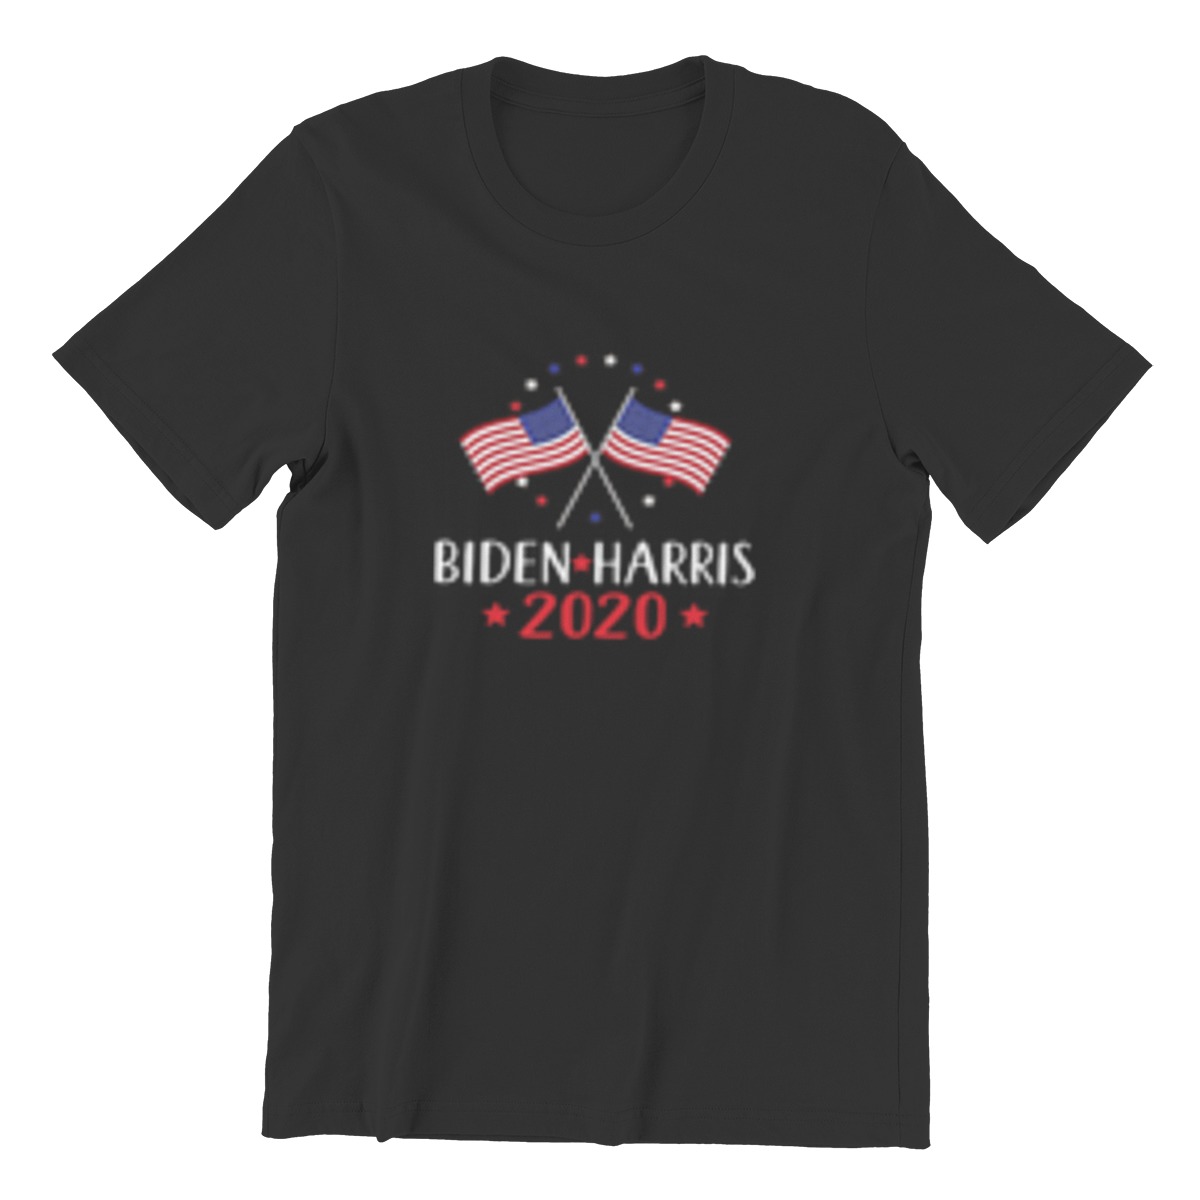 Biden Harris Legging Men's T Shirt Novelty Tops Bitumen Bike Life Tees Clothes Cotton Printed T-Shirt Plus Size T-shirt 3294